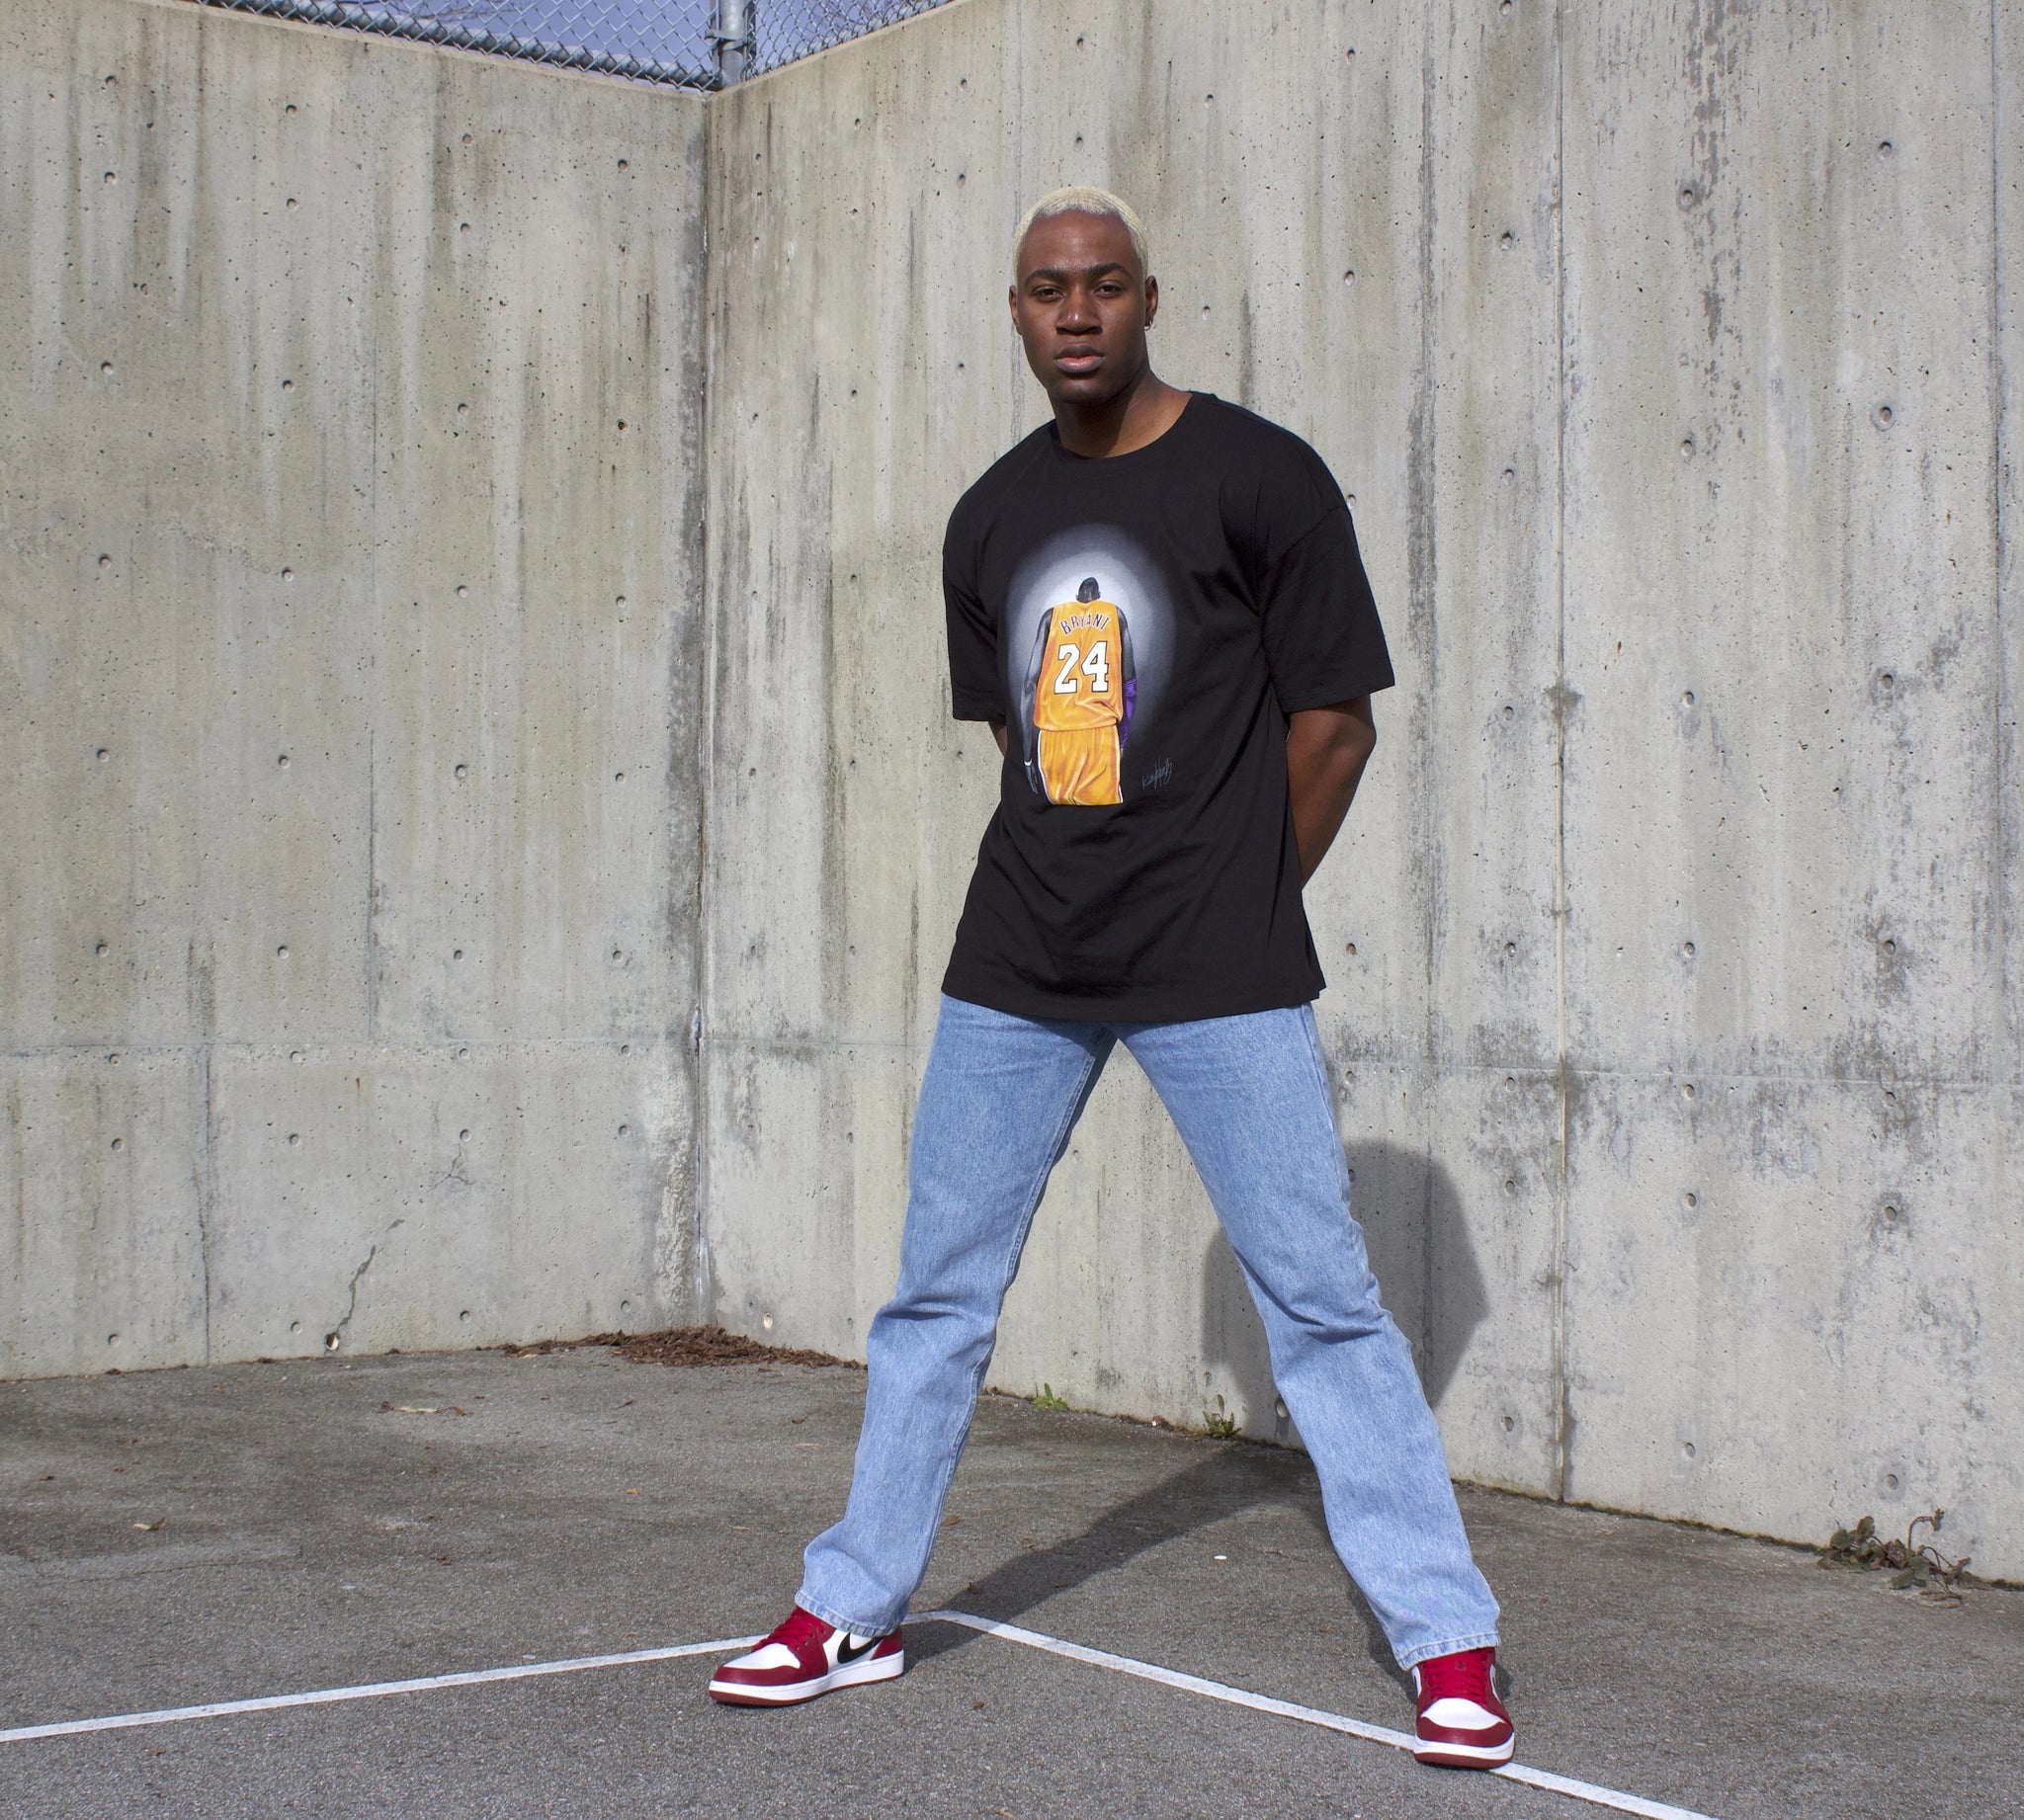 8:24 T Shirt-In Memory of Kobe Bryant